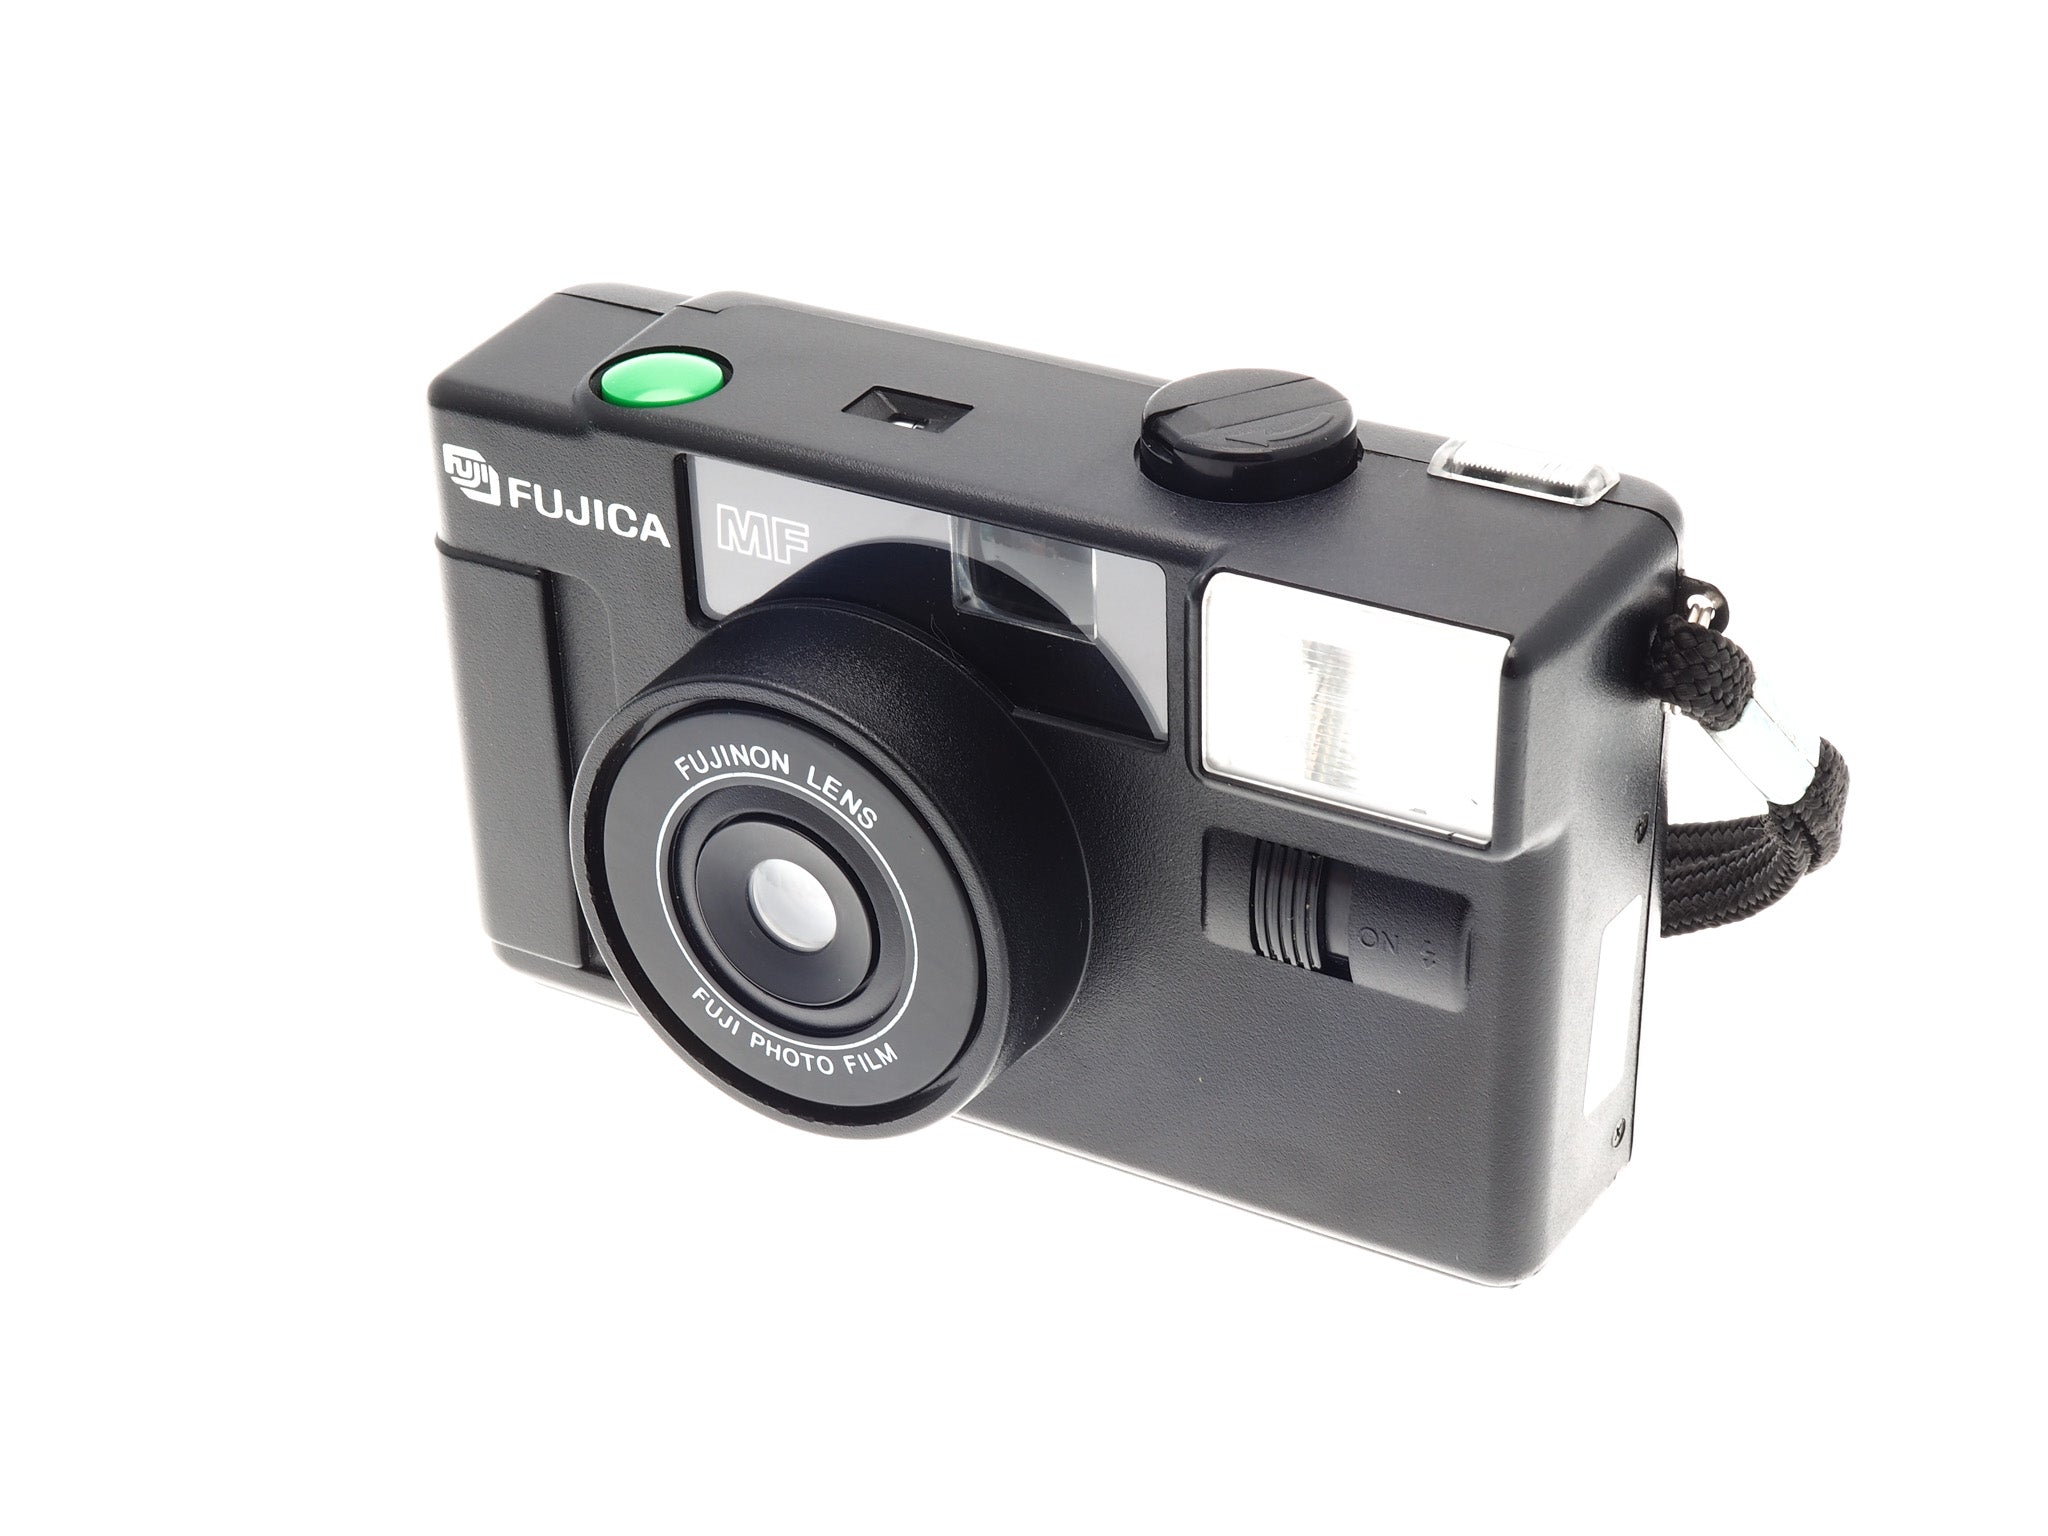 Fujica MF - Camera